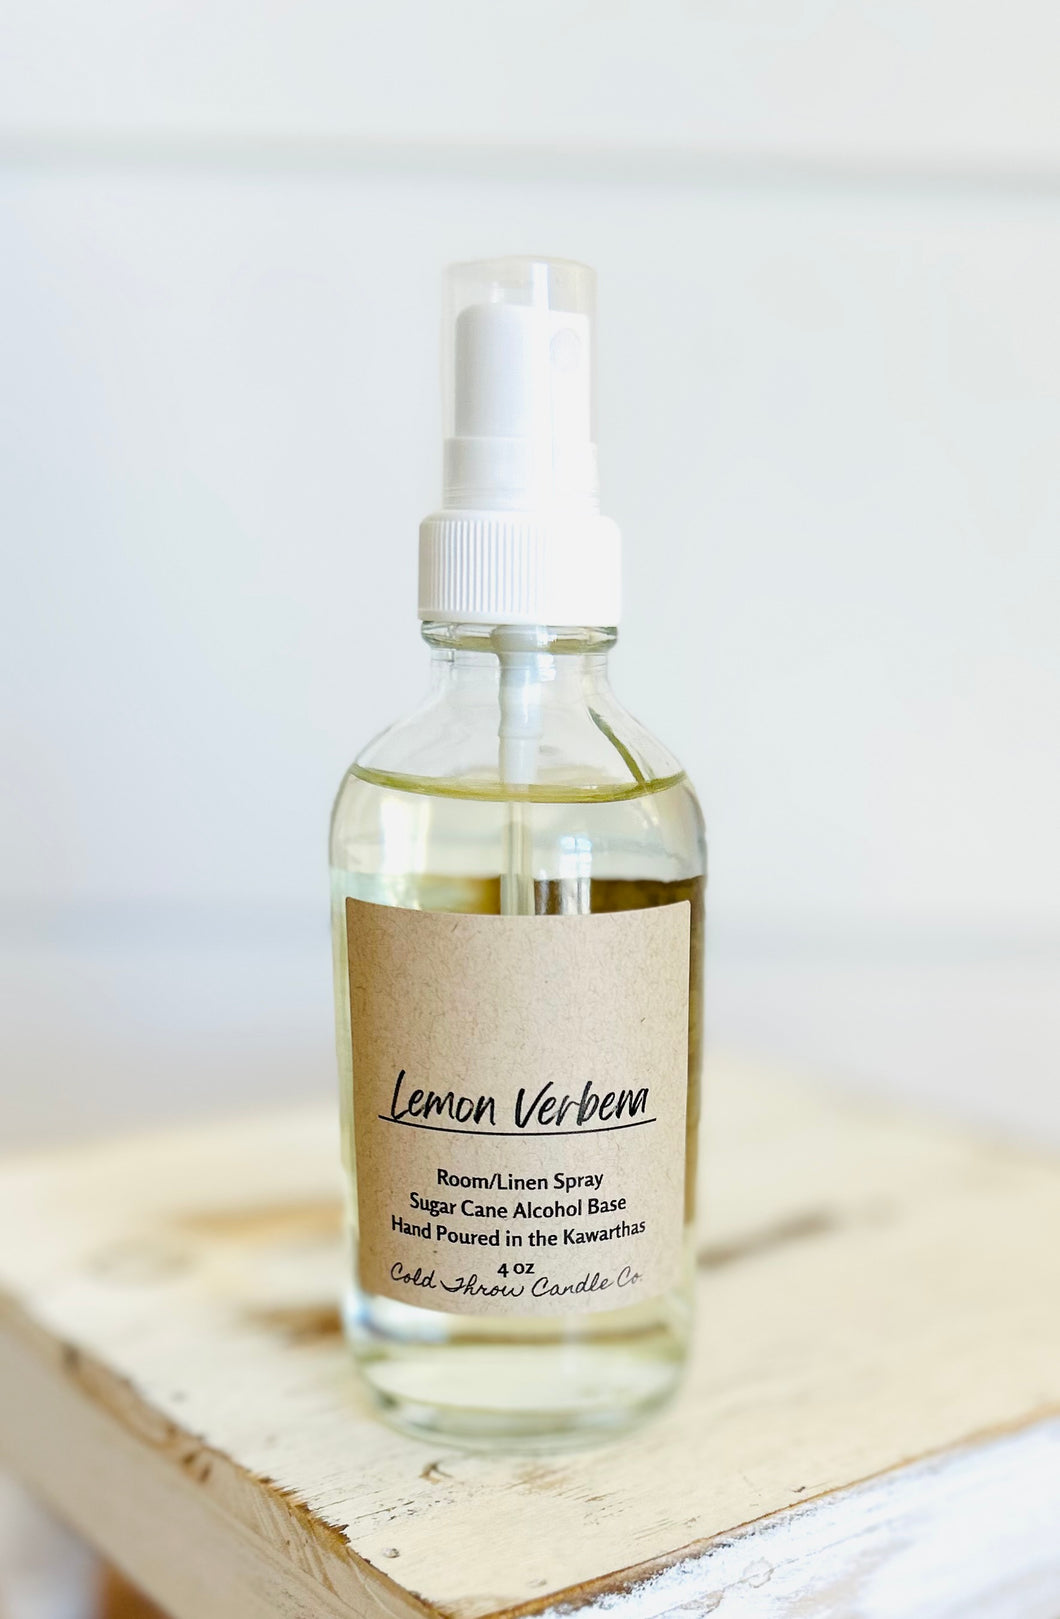 Lemon Verbena Room/Linen Spray